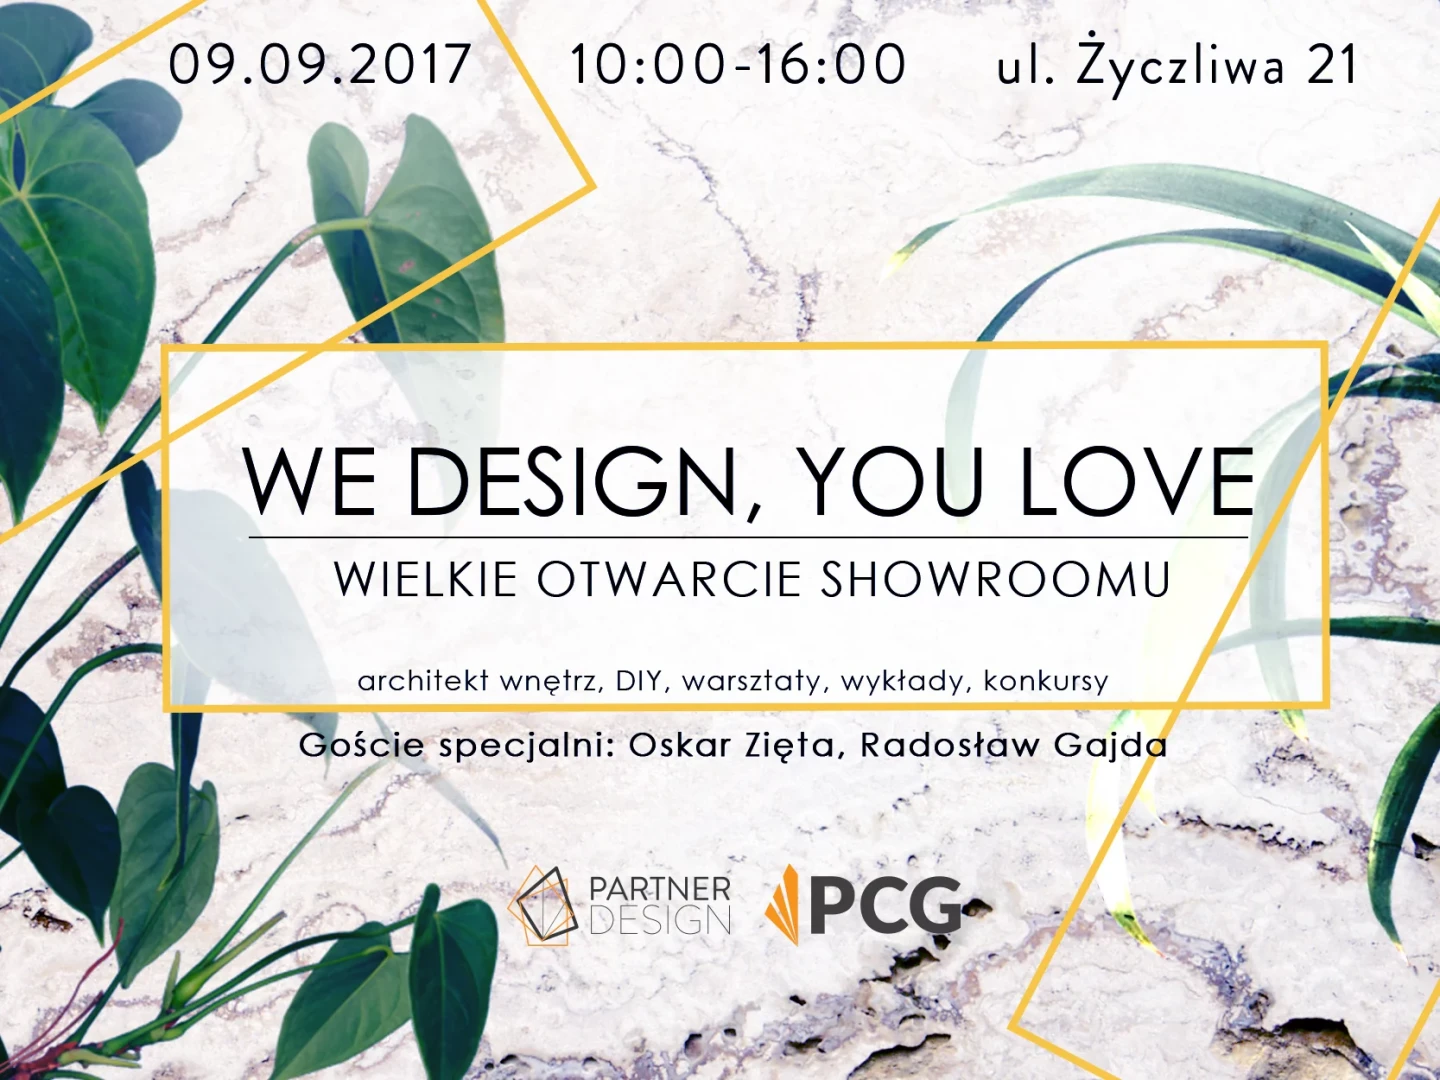 We design, You love - Wielkie otwarcie showroomu